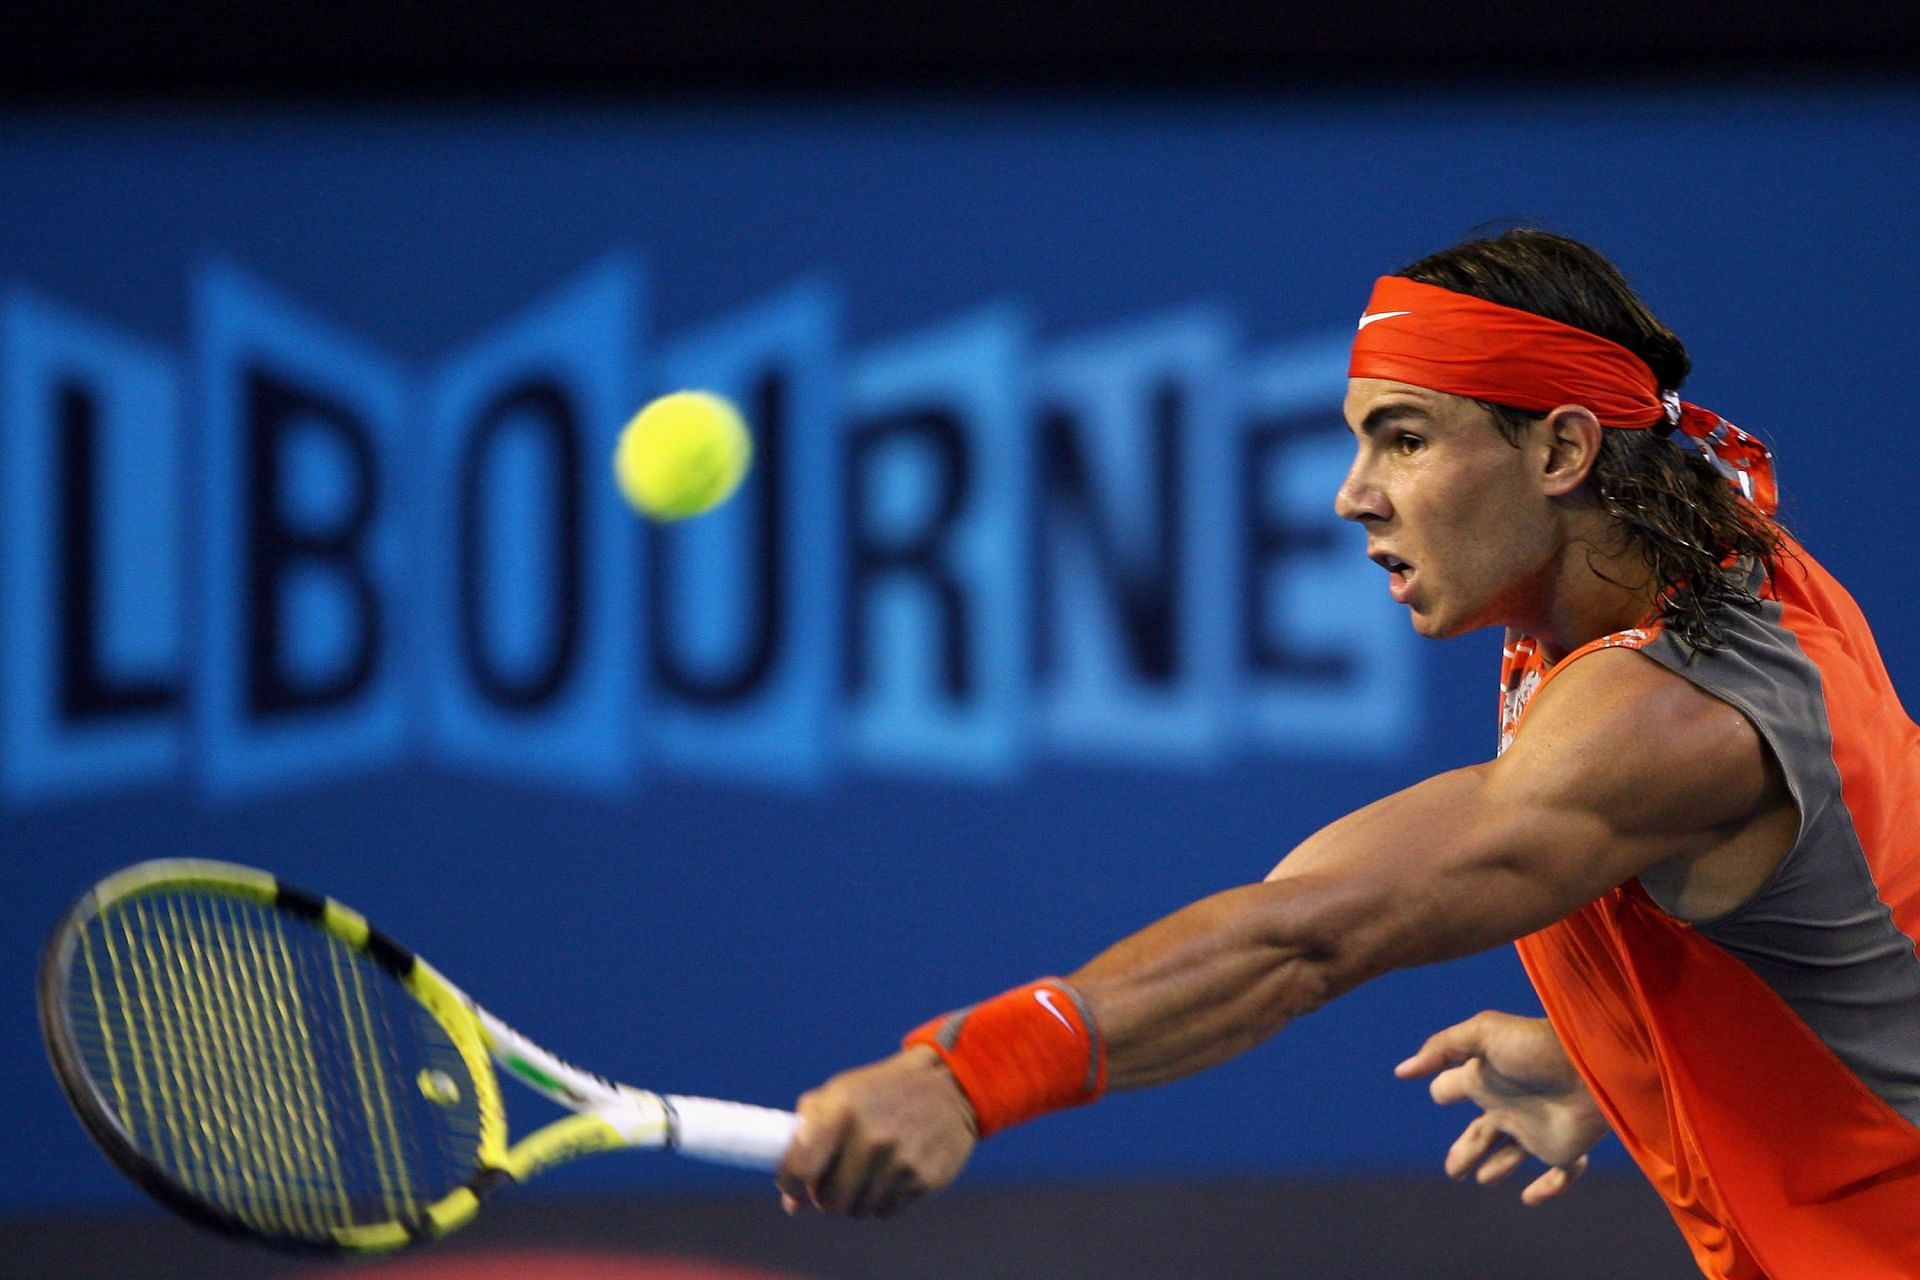 Rafael Nadal during his 6-2, 6-3, 6-2 loss to Jo-Wilfried Tsonga at the 2008 Australian Open